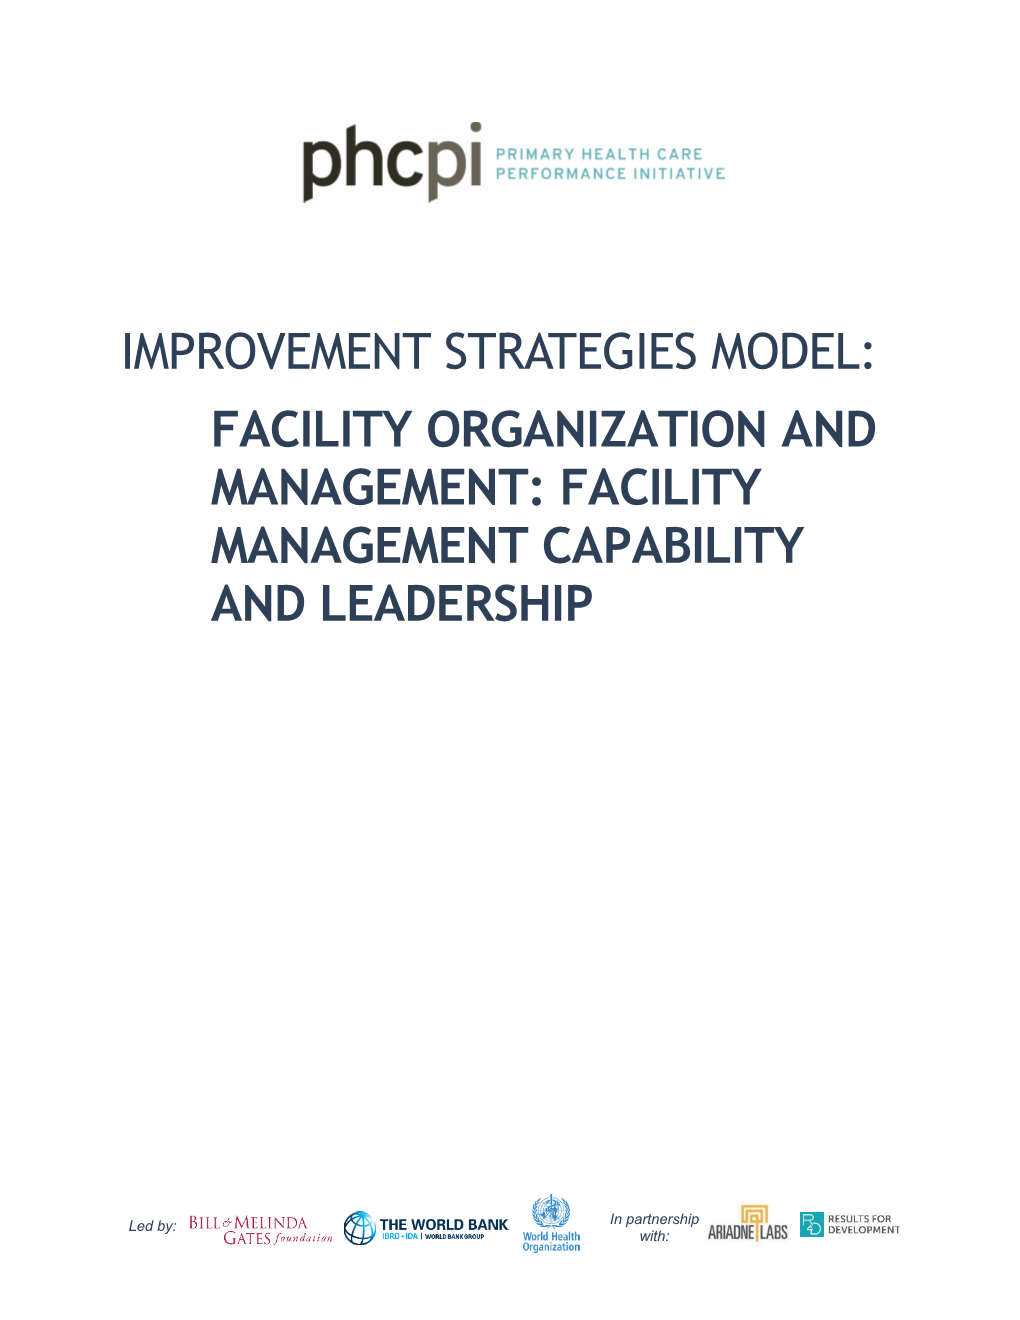 Improvement Strategies Model: Facility Organization and Management: Facility Management Capability and Leadership